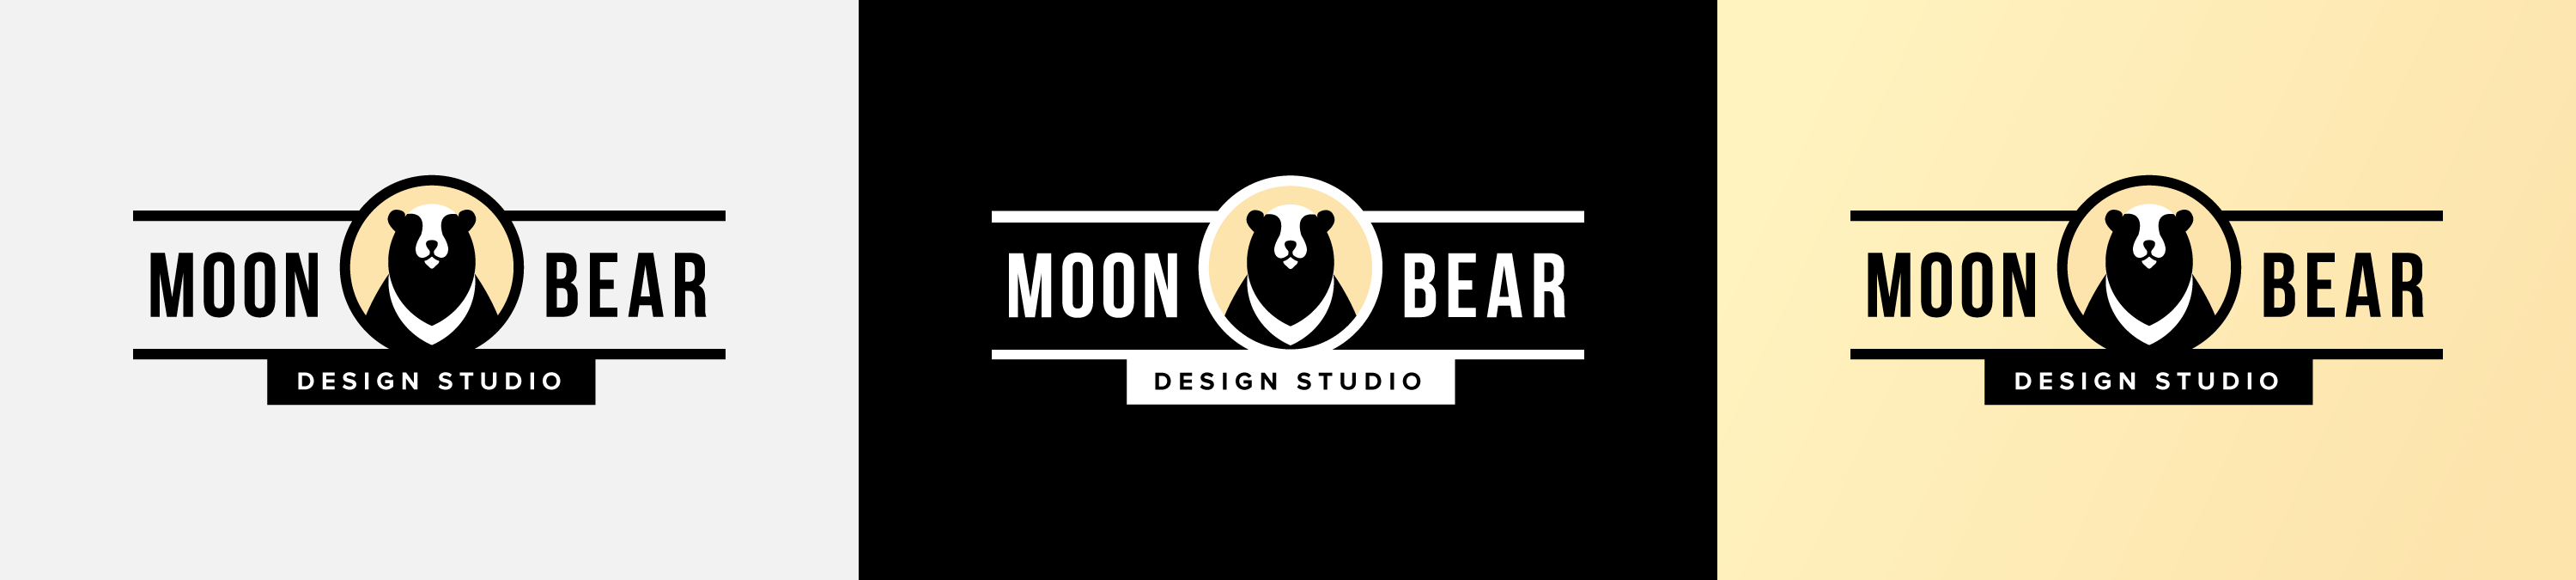 Moon Bear Design Studio Logo Color Variants